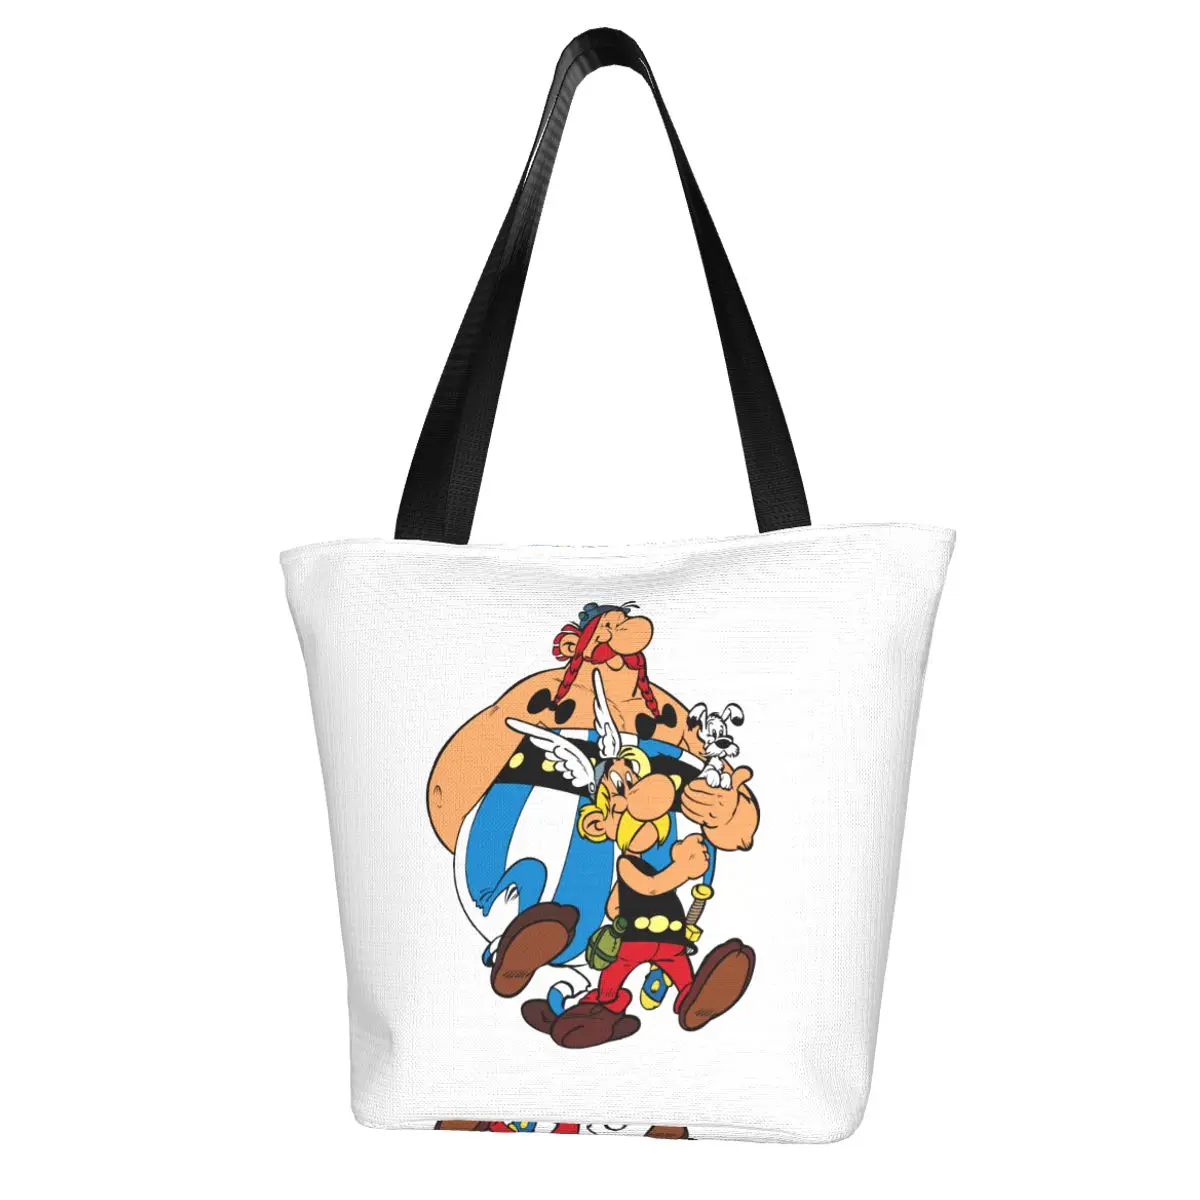 Asterix And Obelix Shopping Bag Aesthetic Cloth Outdoor Handbag Female Fashion Bags